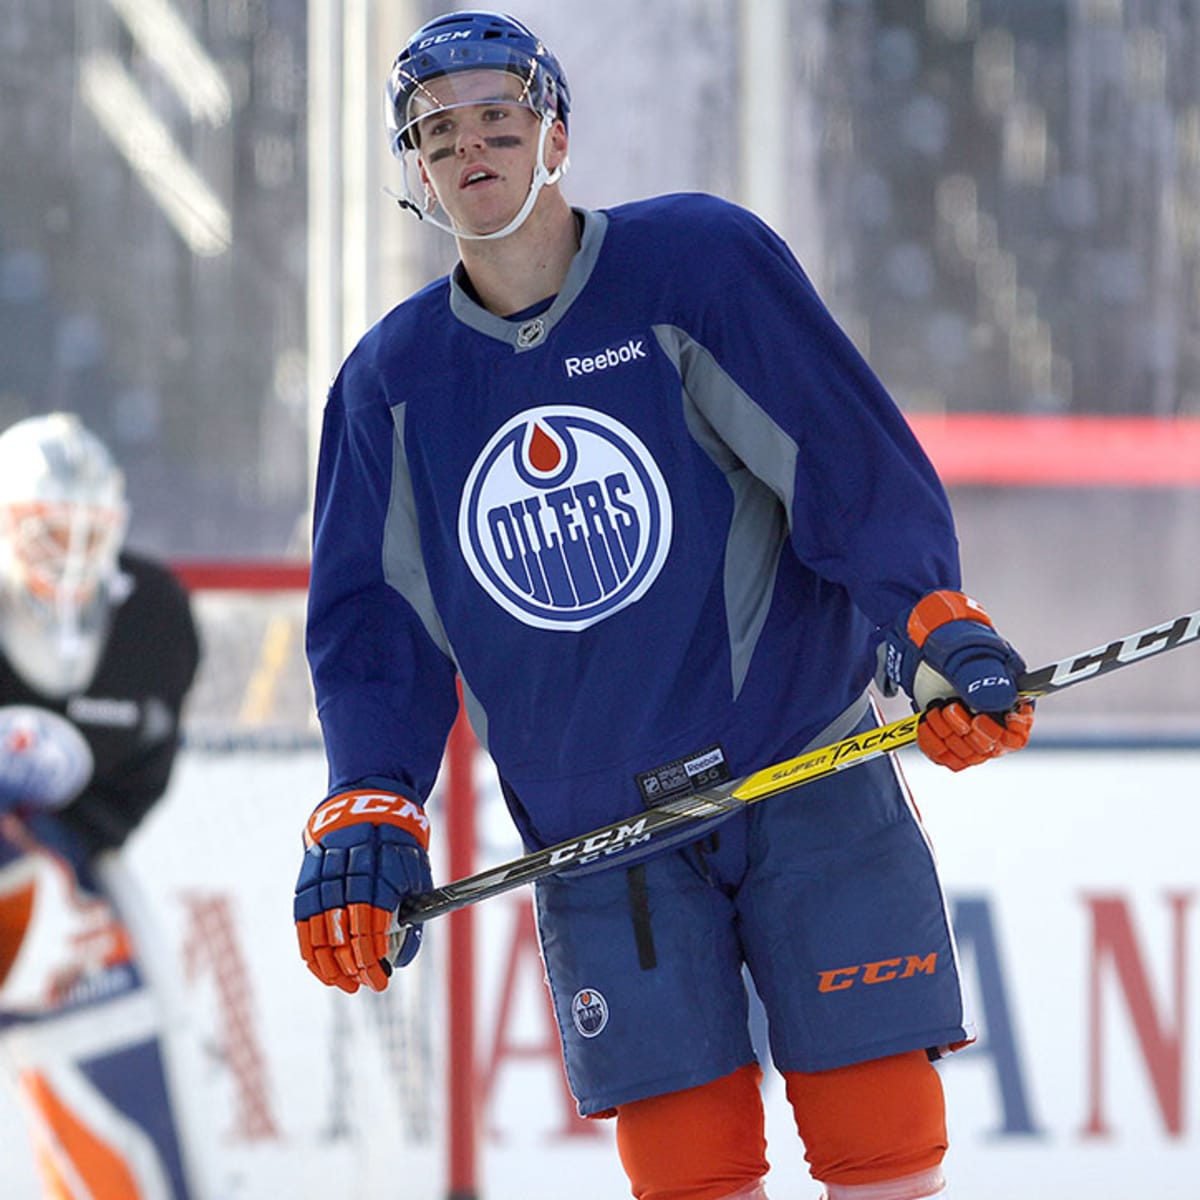 Connor McDavid Edmonton Oilers NHL Reebok Youth Blue Replica Hockey Jersey  (Youth Large/X-Large)